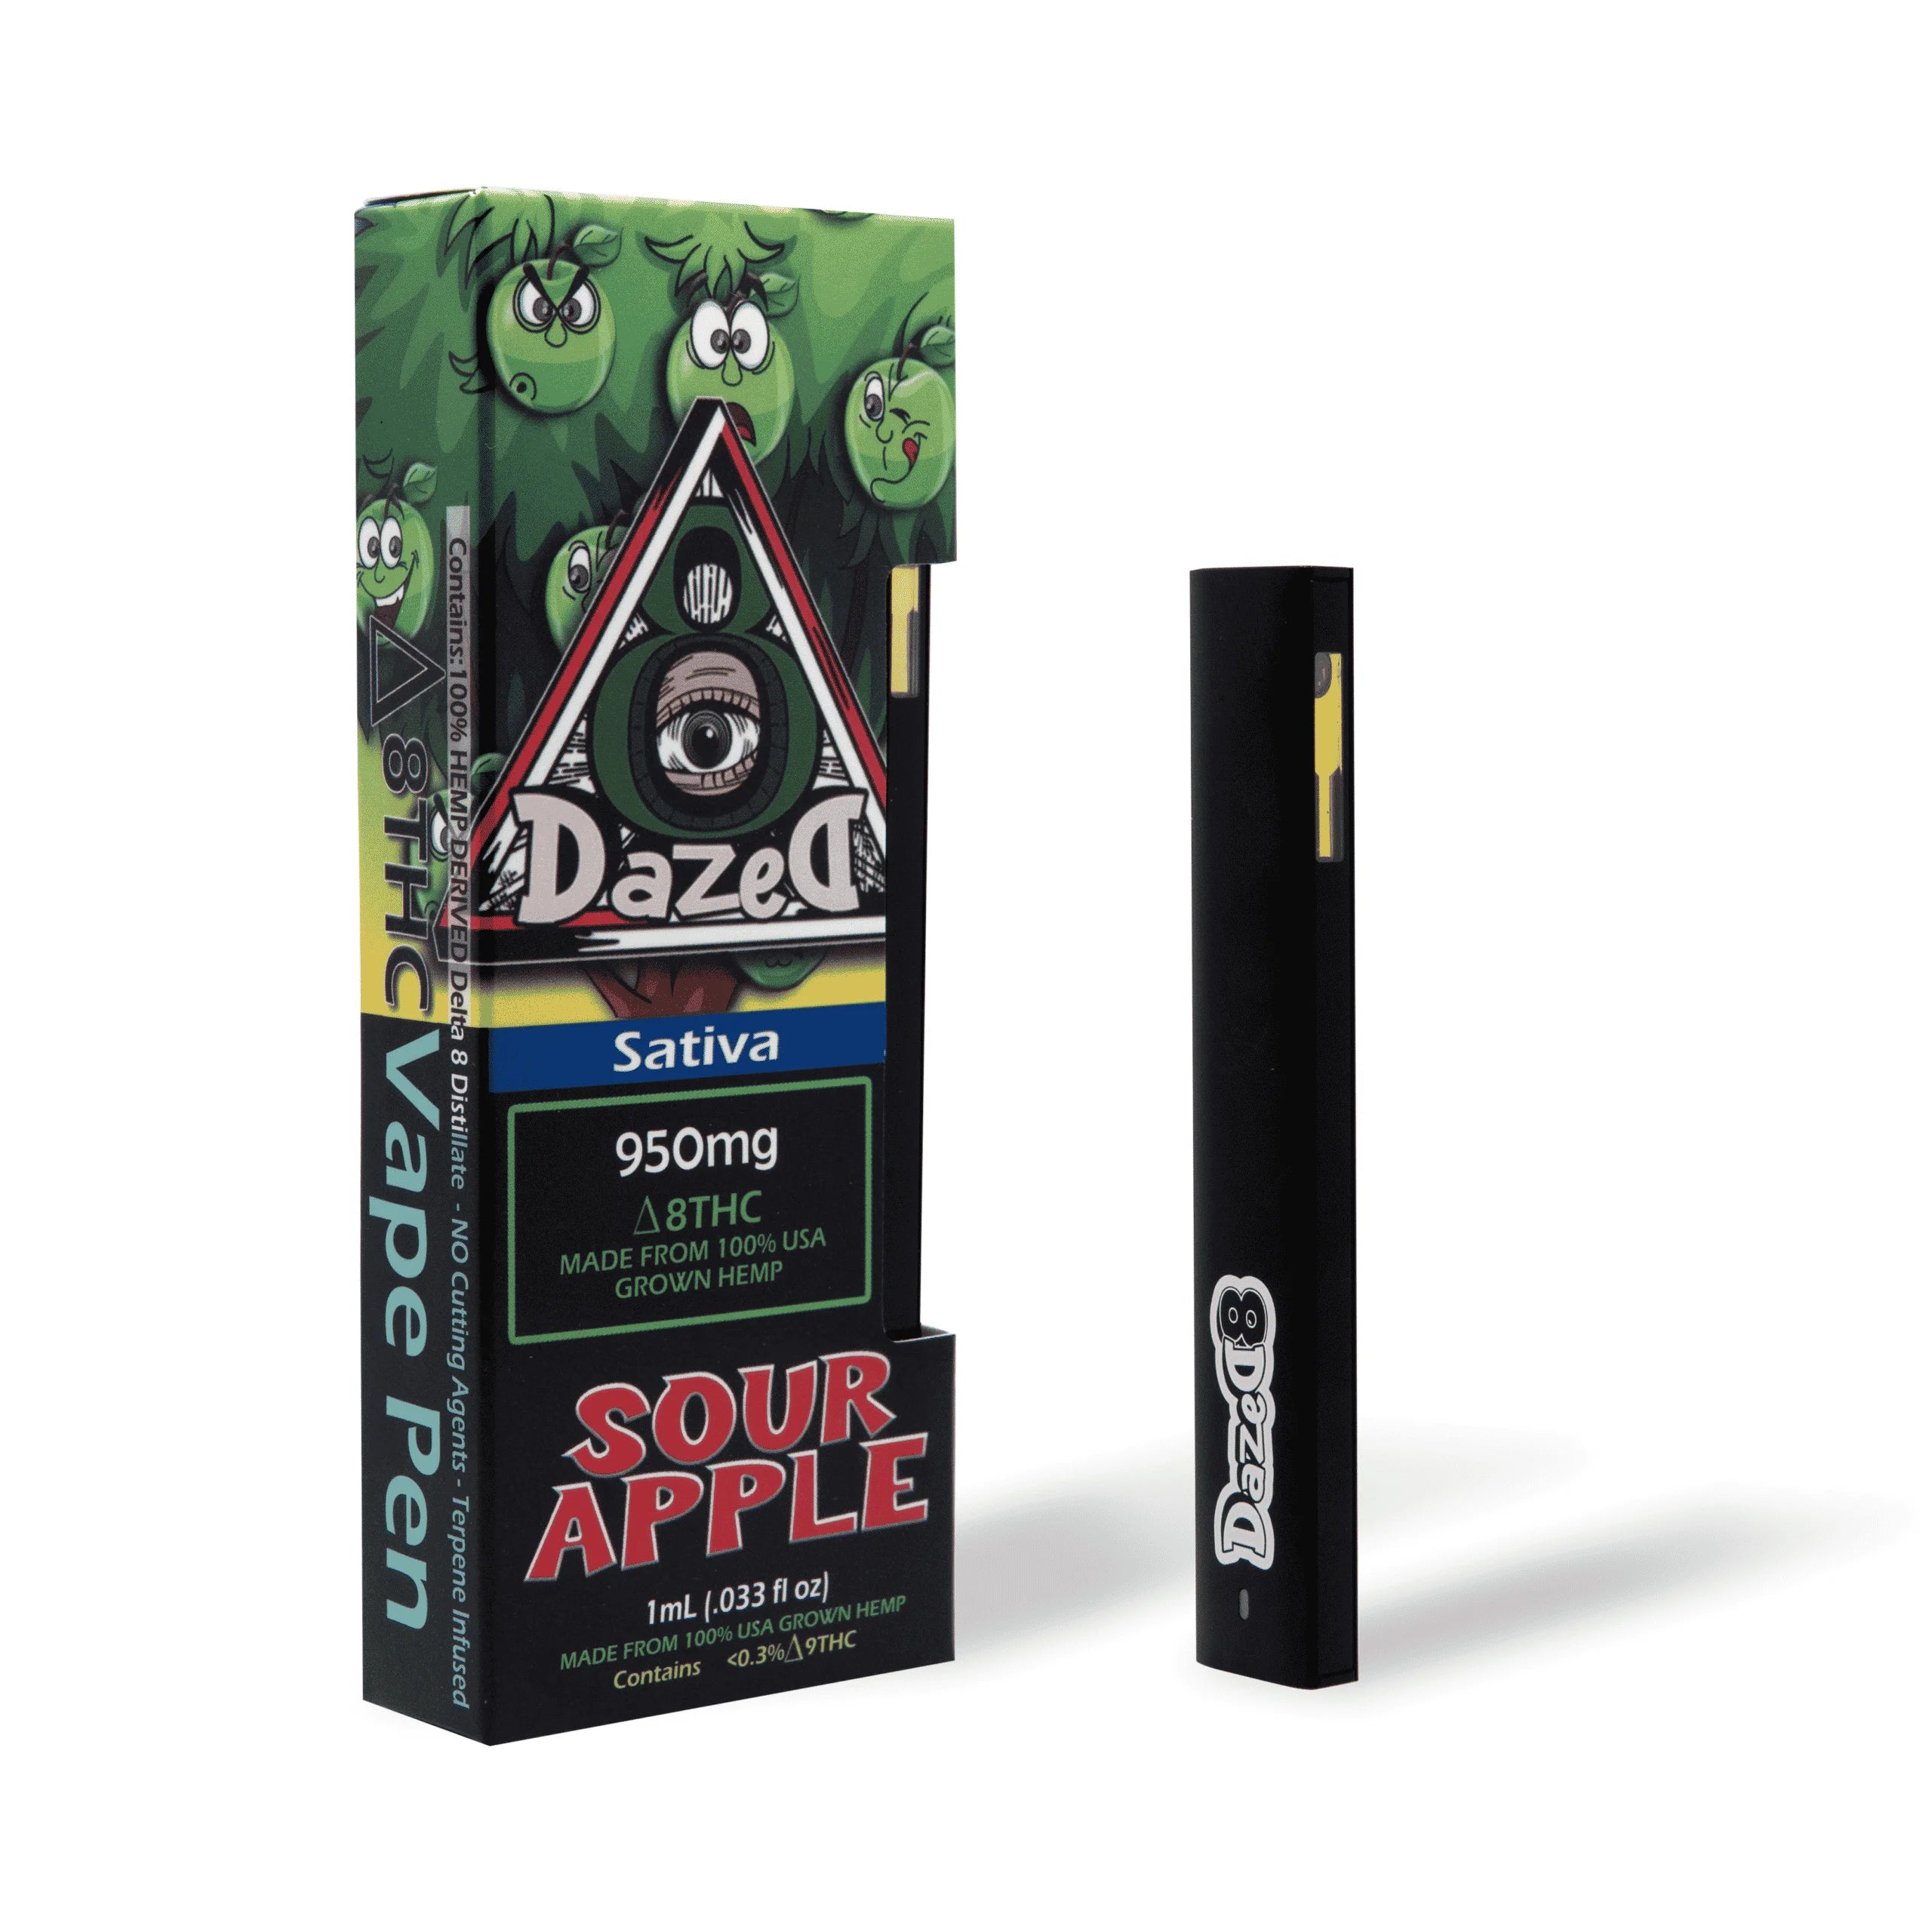 DazeD8 Sour Apple Delta 8 Disposable (1g) Best Price